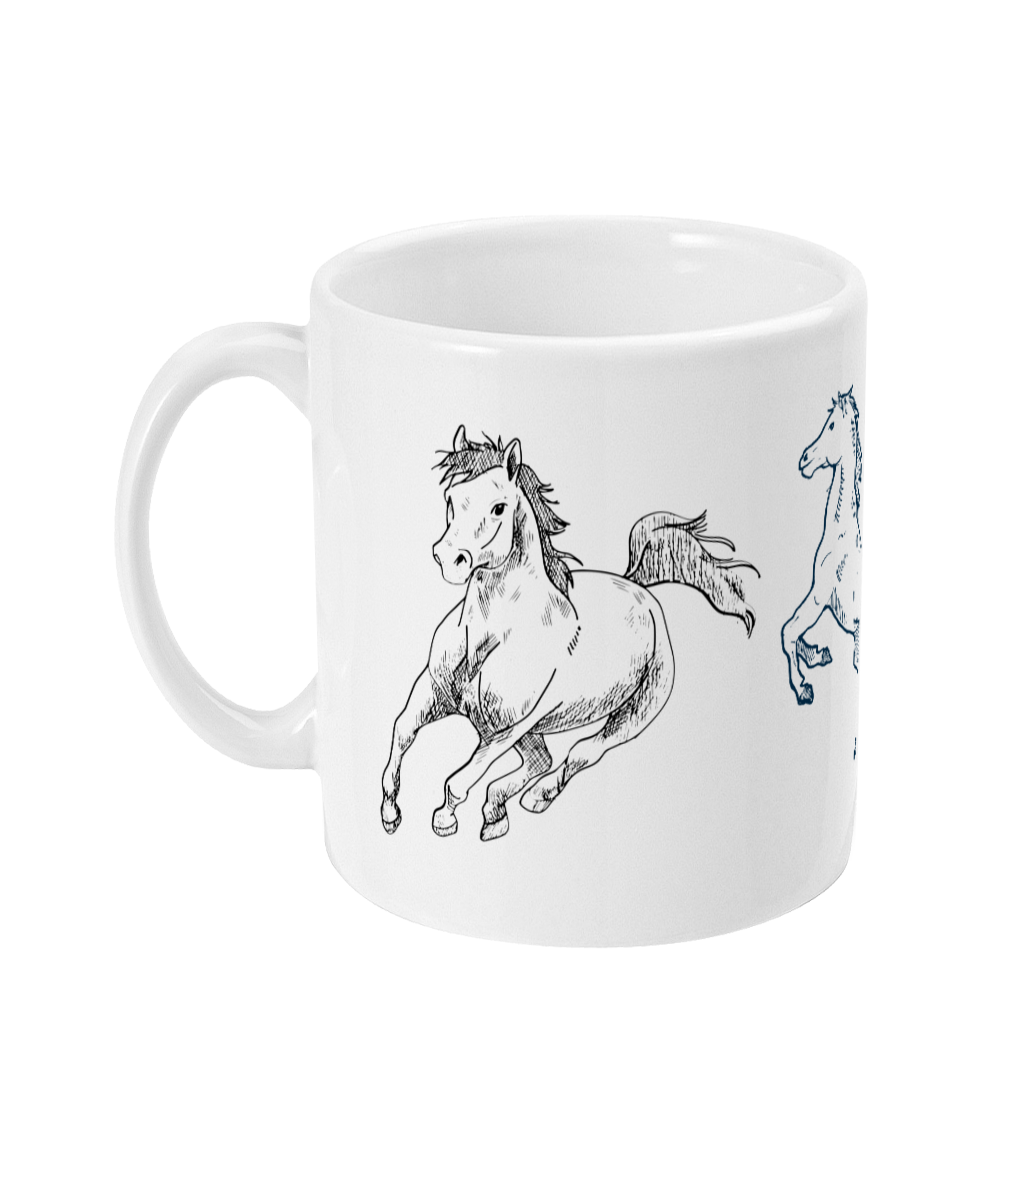 Gorgeous 11 oz Coffee Mug With Pencil Drawn Horses